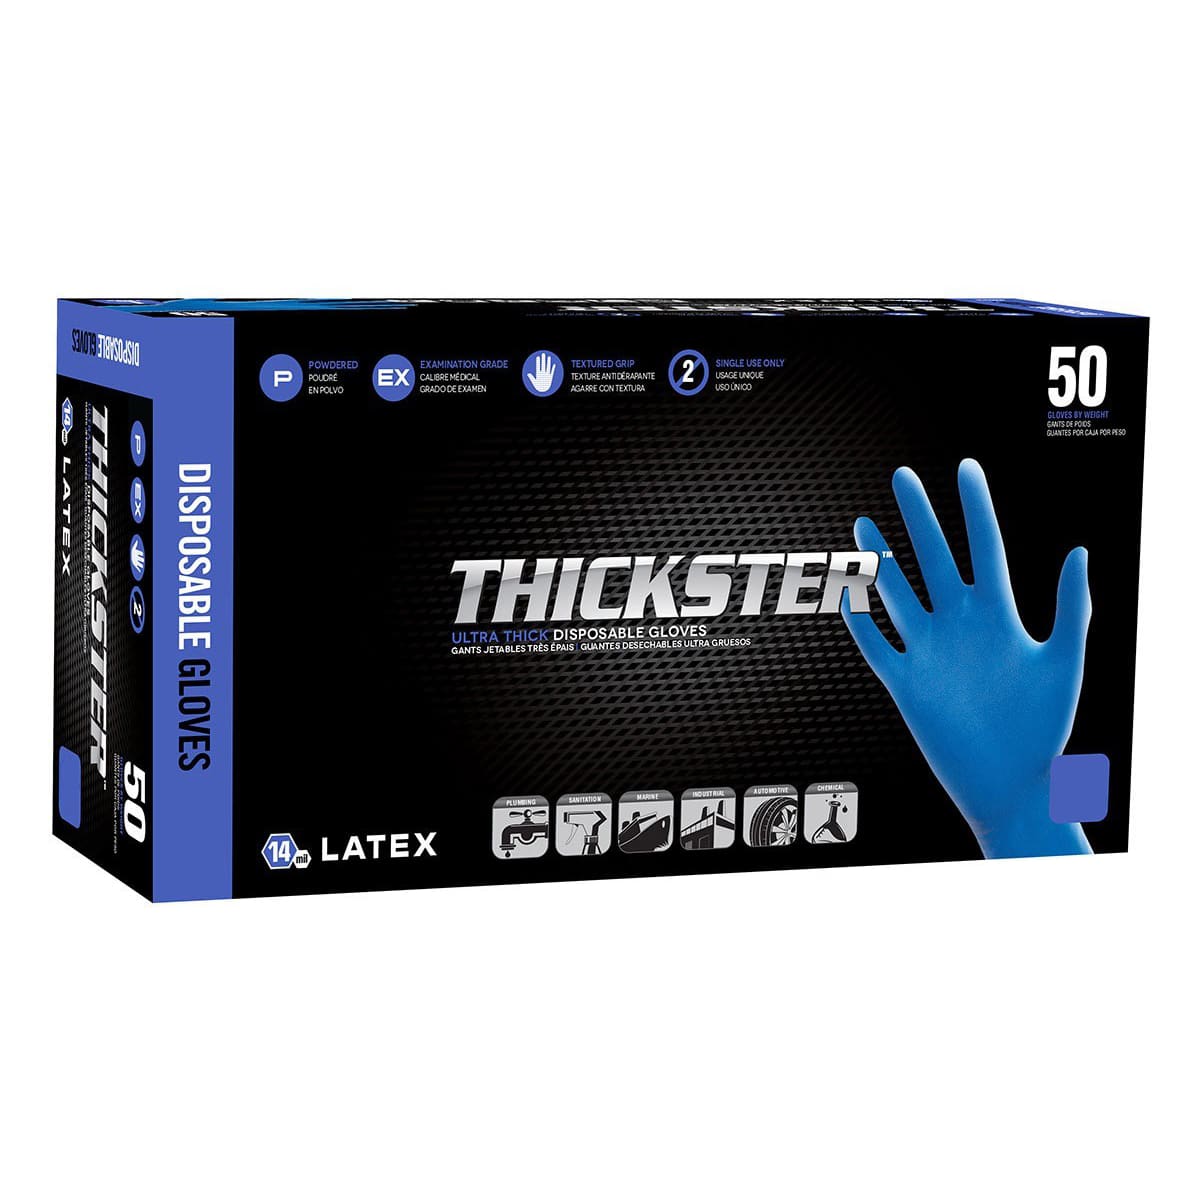 Thickster powder-free latex exam grade gloves